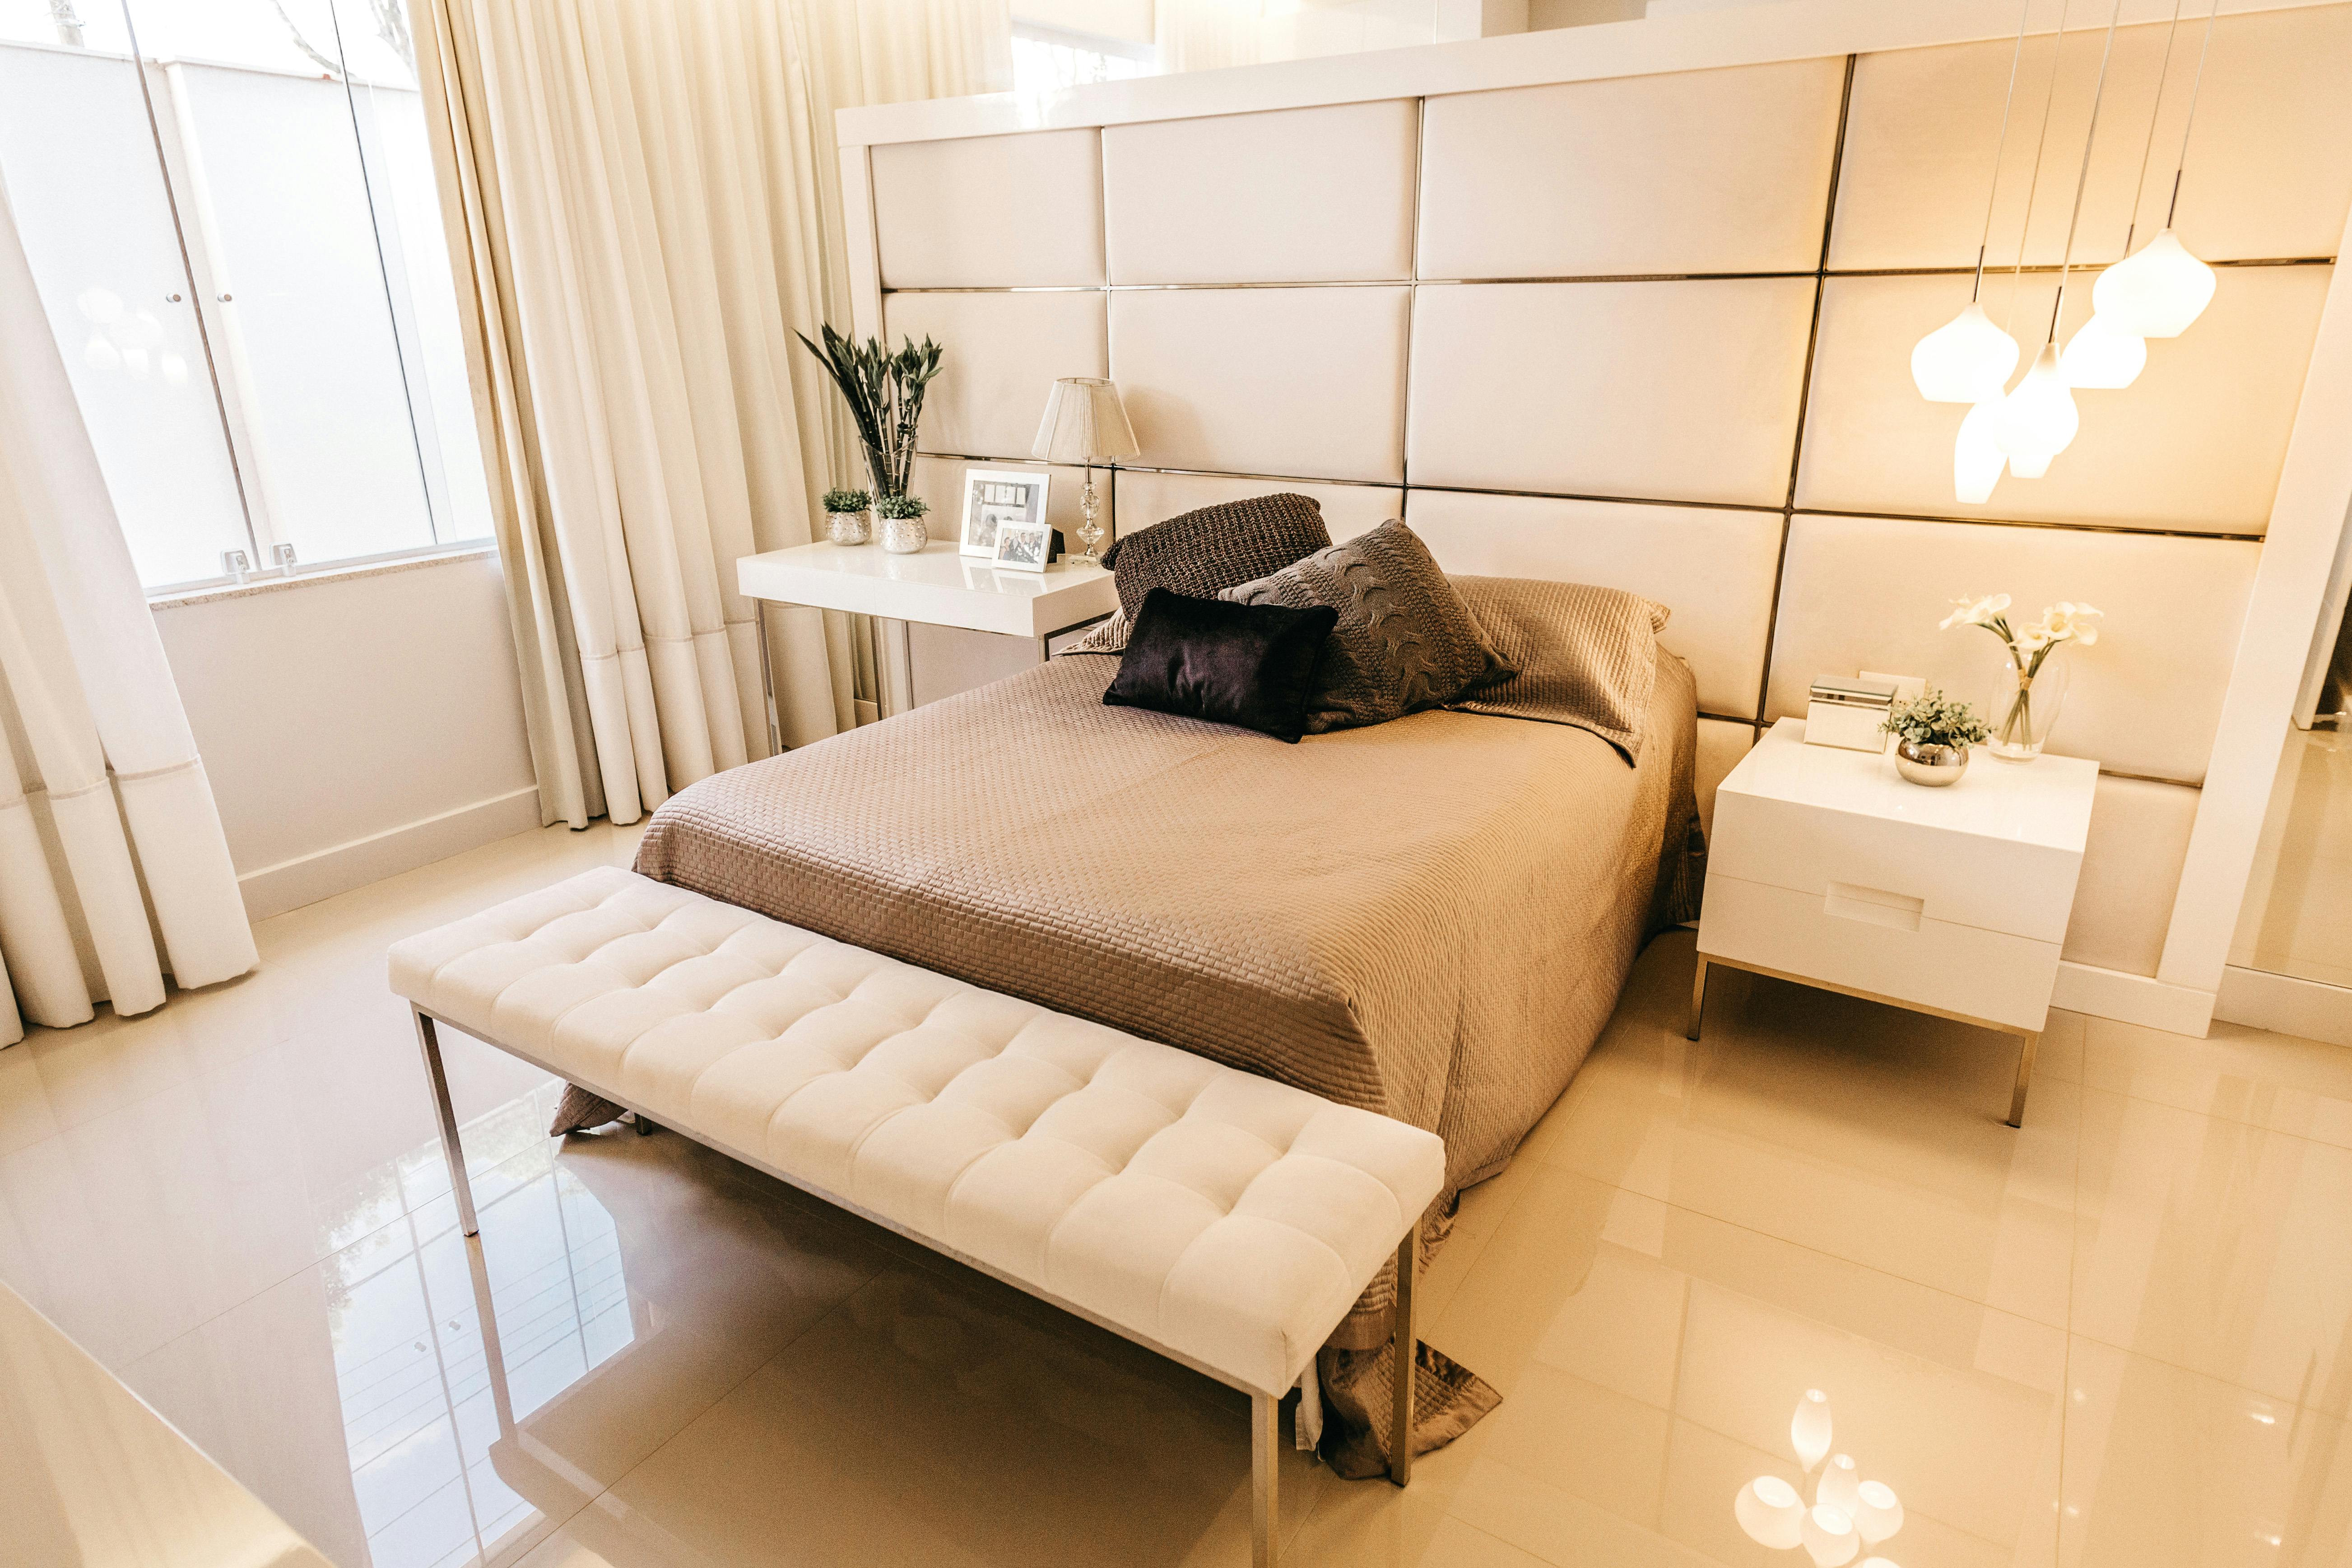 modern bedroom furniture with lights